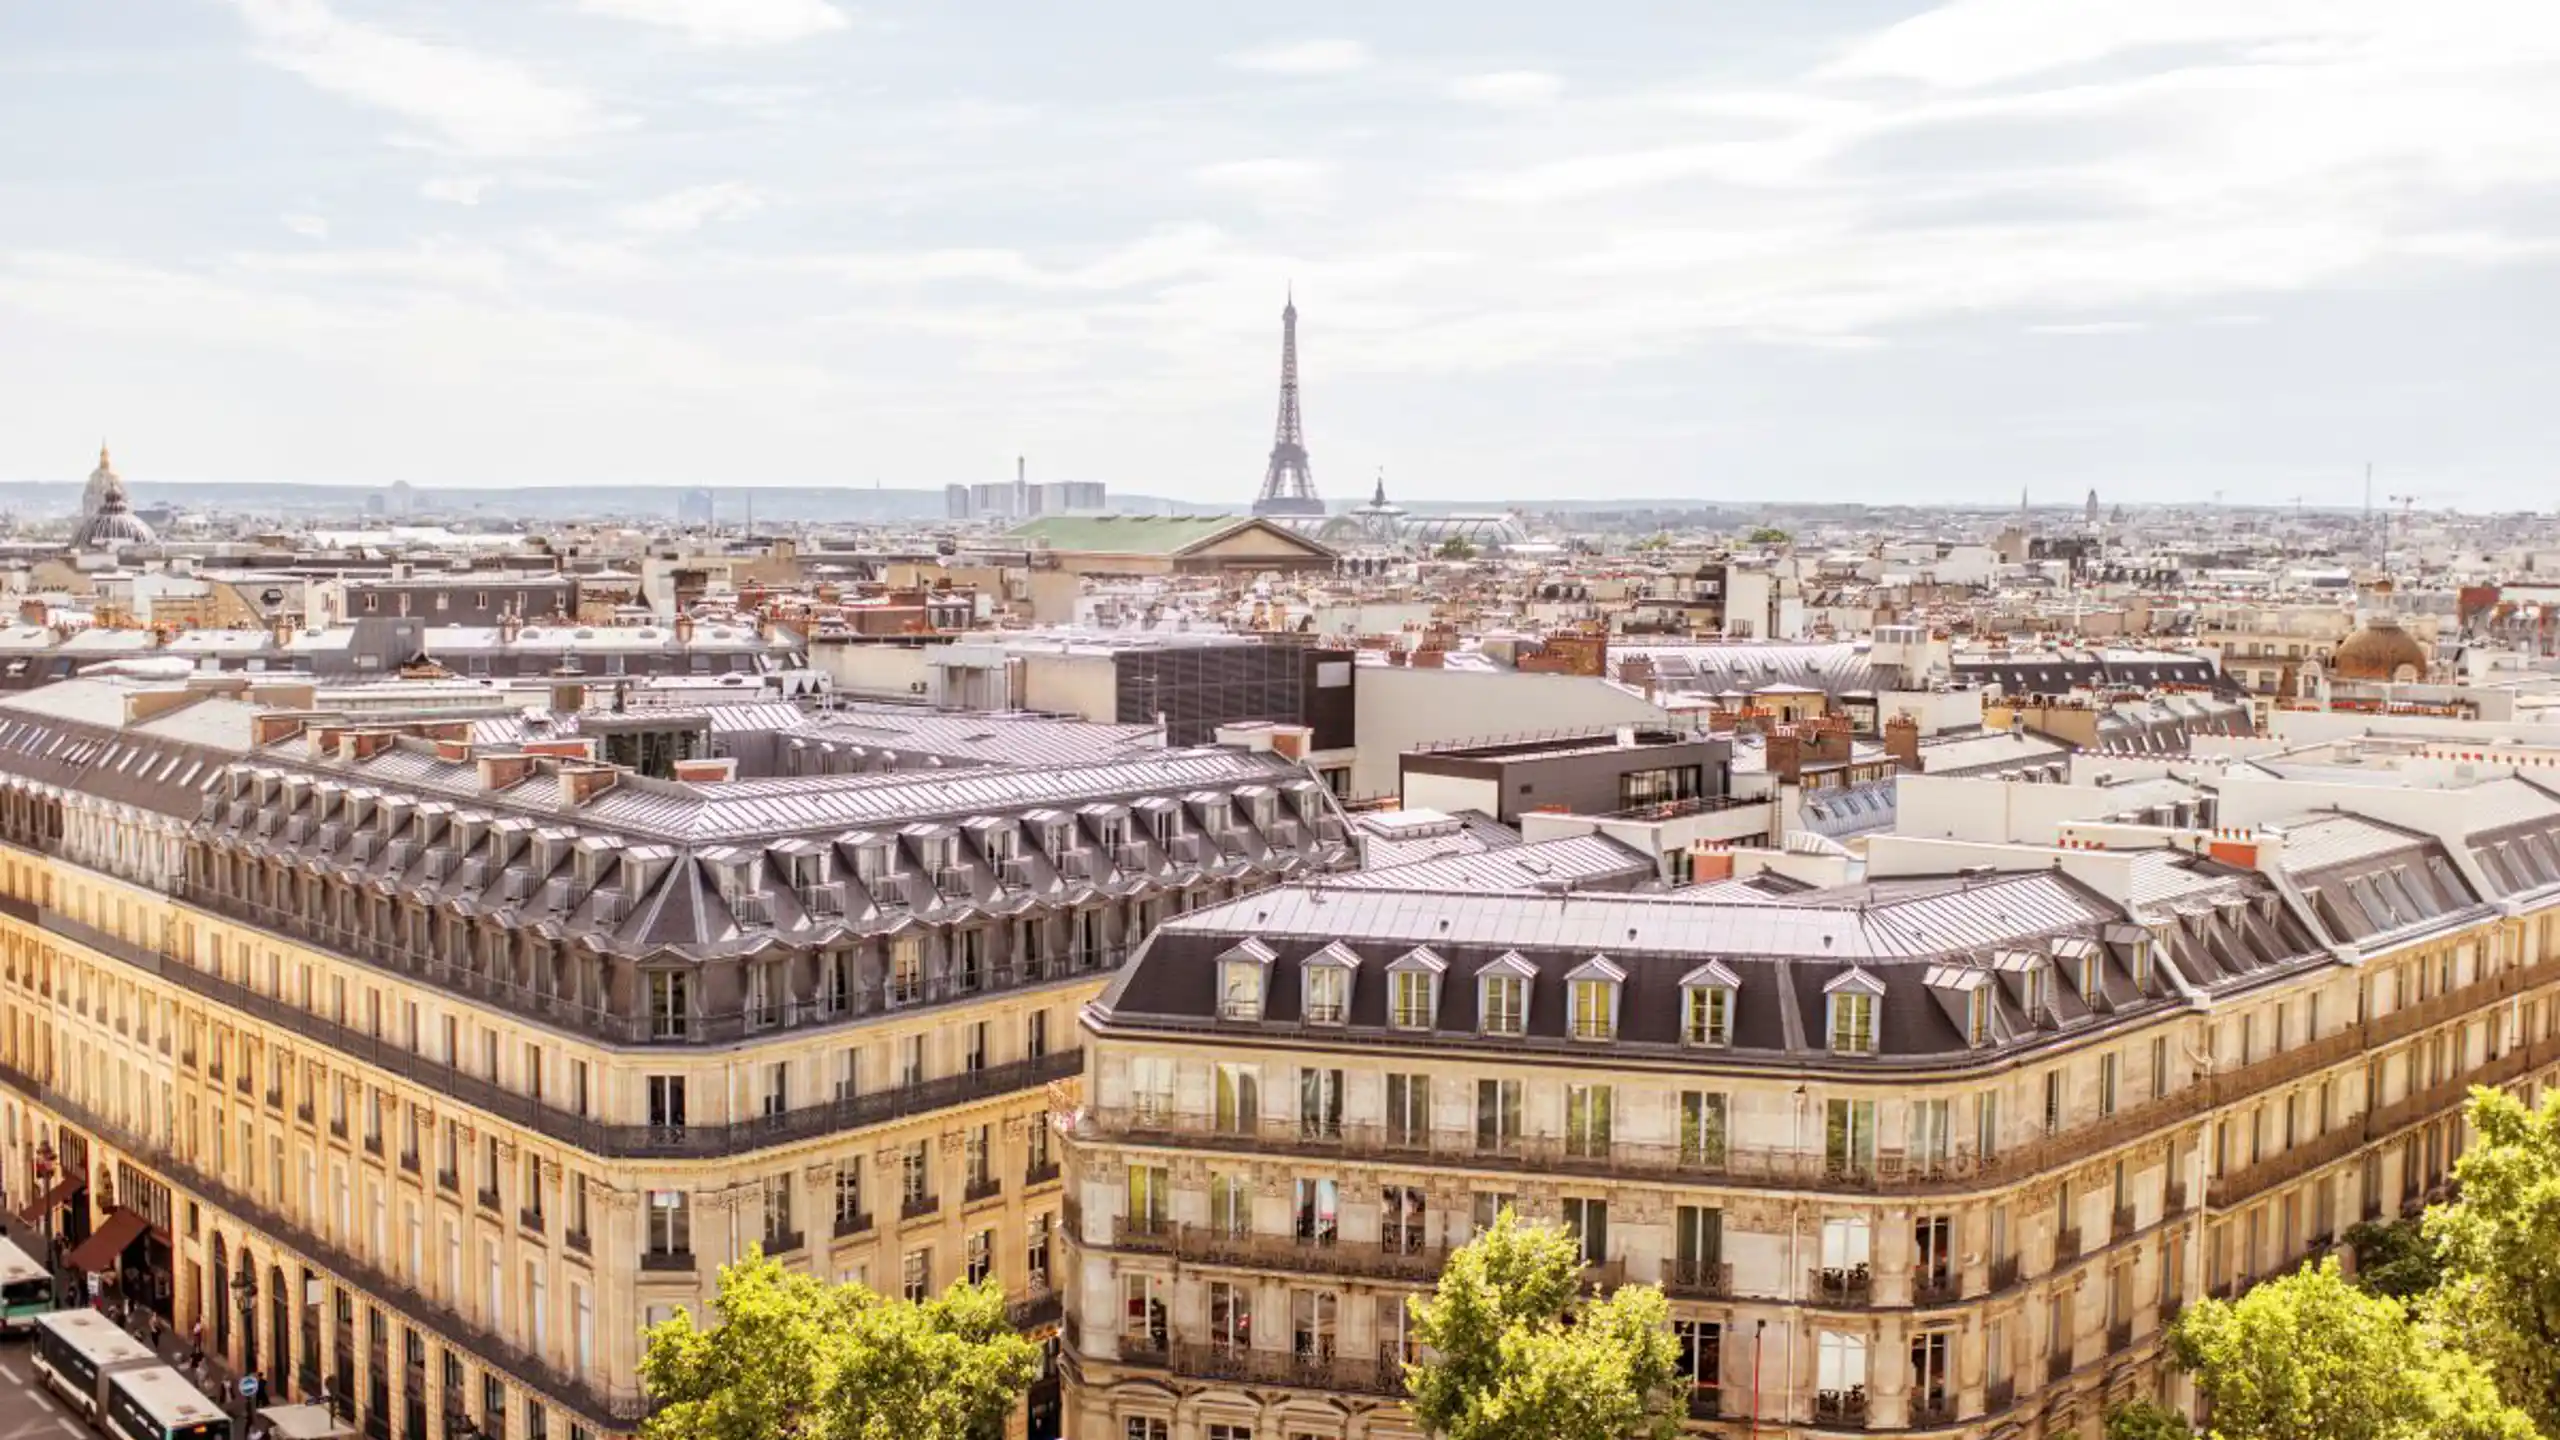 Cityscape View Of Paris 2023 11 27 04 59 23 Utc (2)